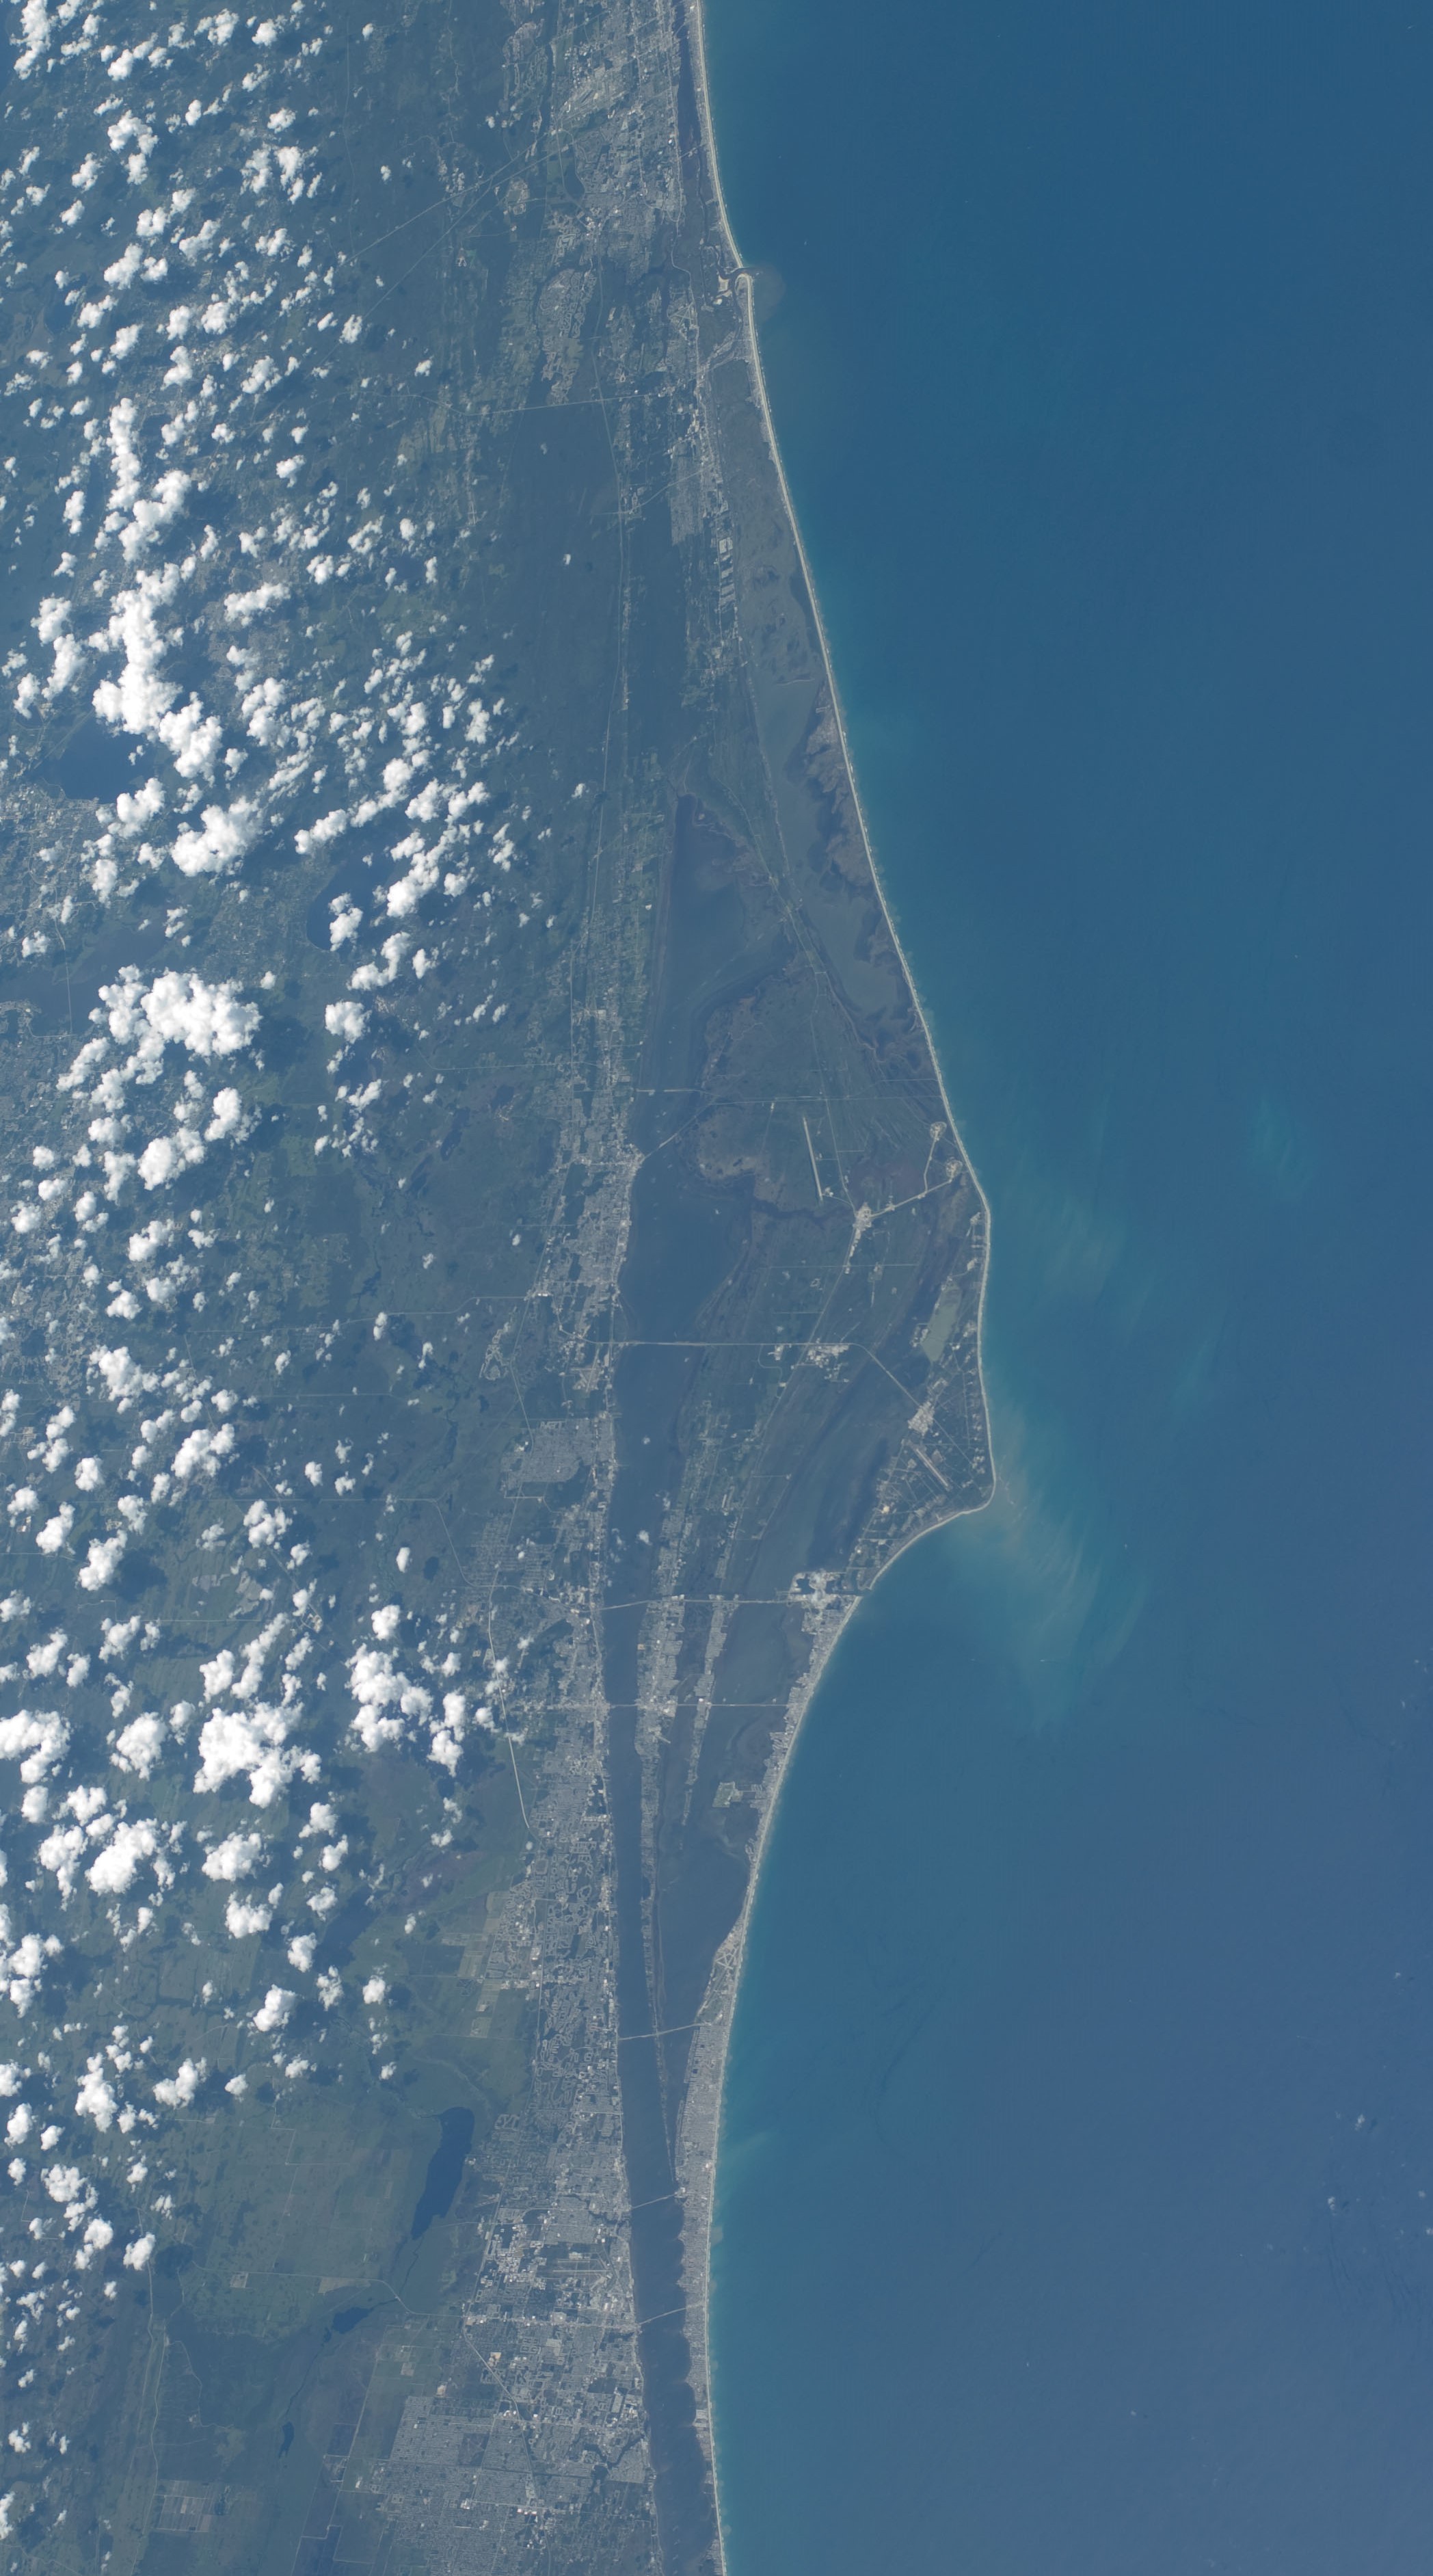 The central Florida coast including NASA’s Kennedy Space Center